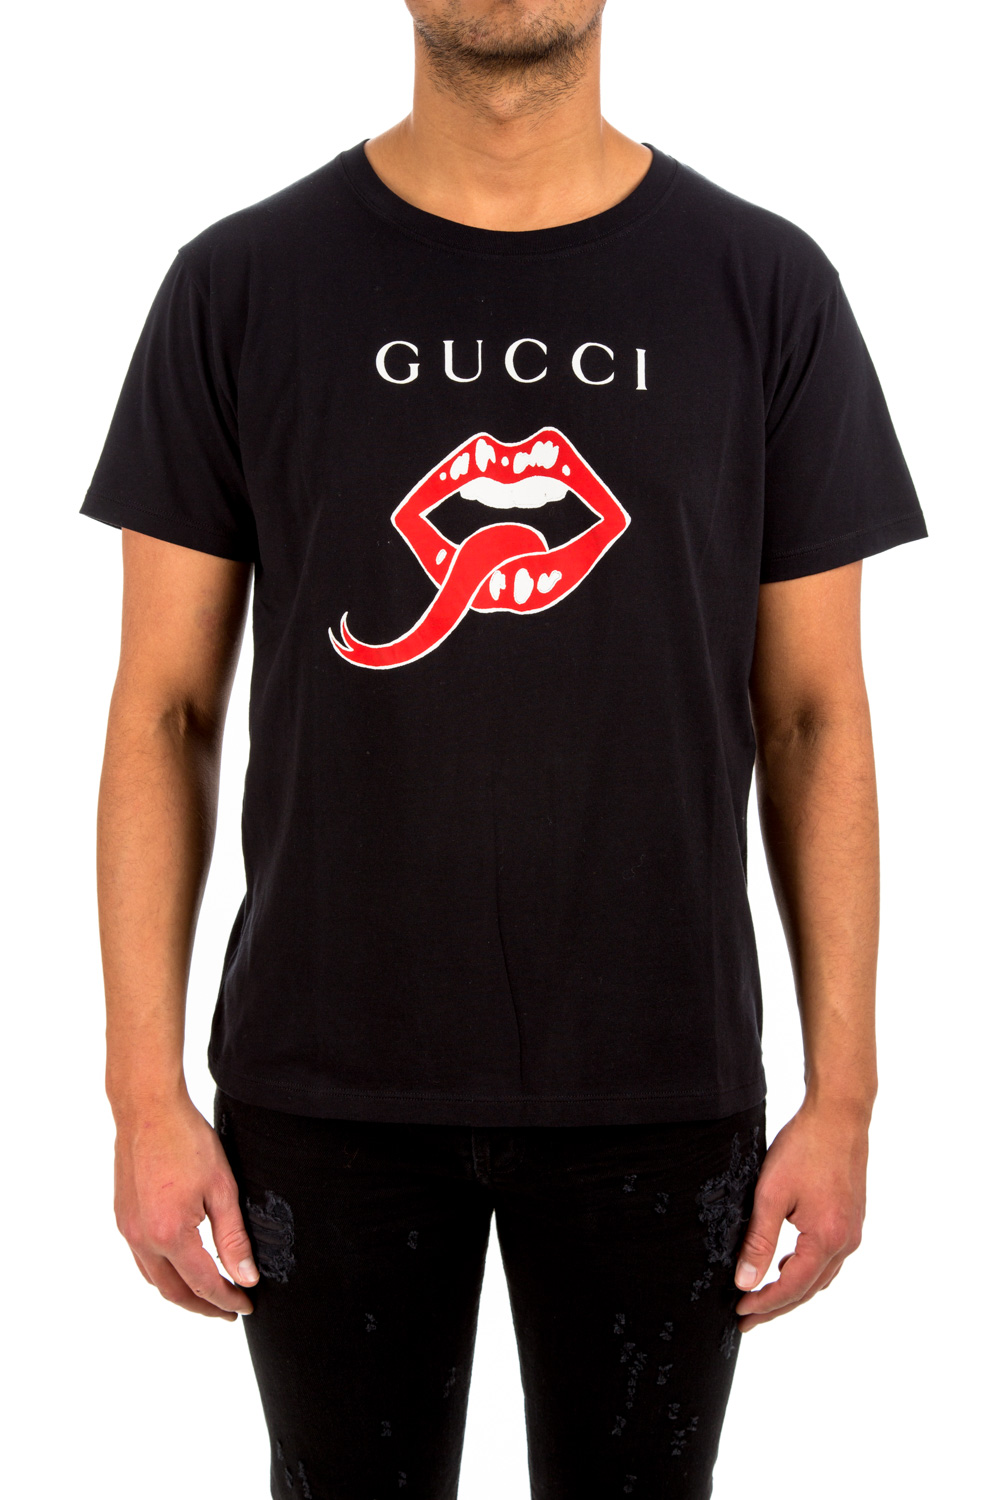 Gucci T-shirt | Credomen